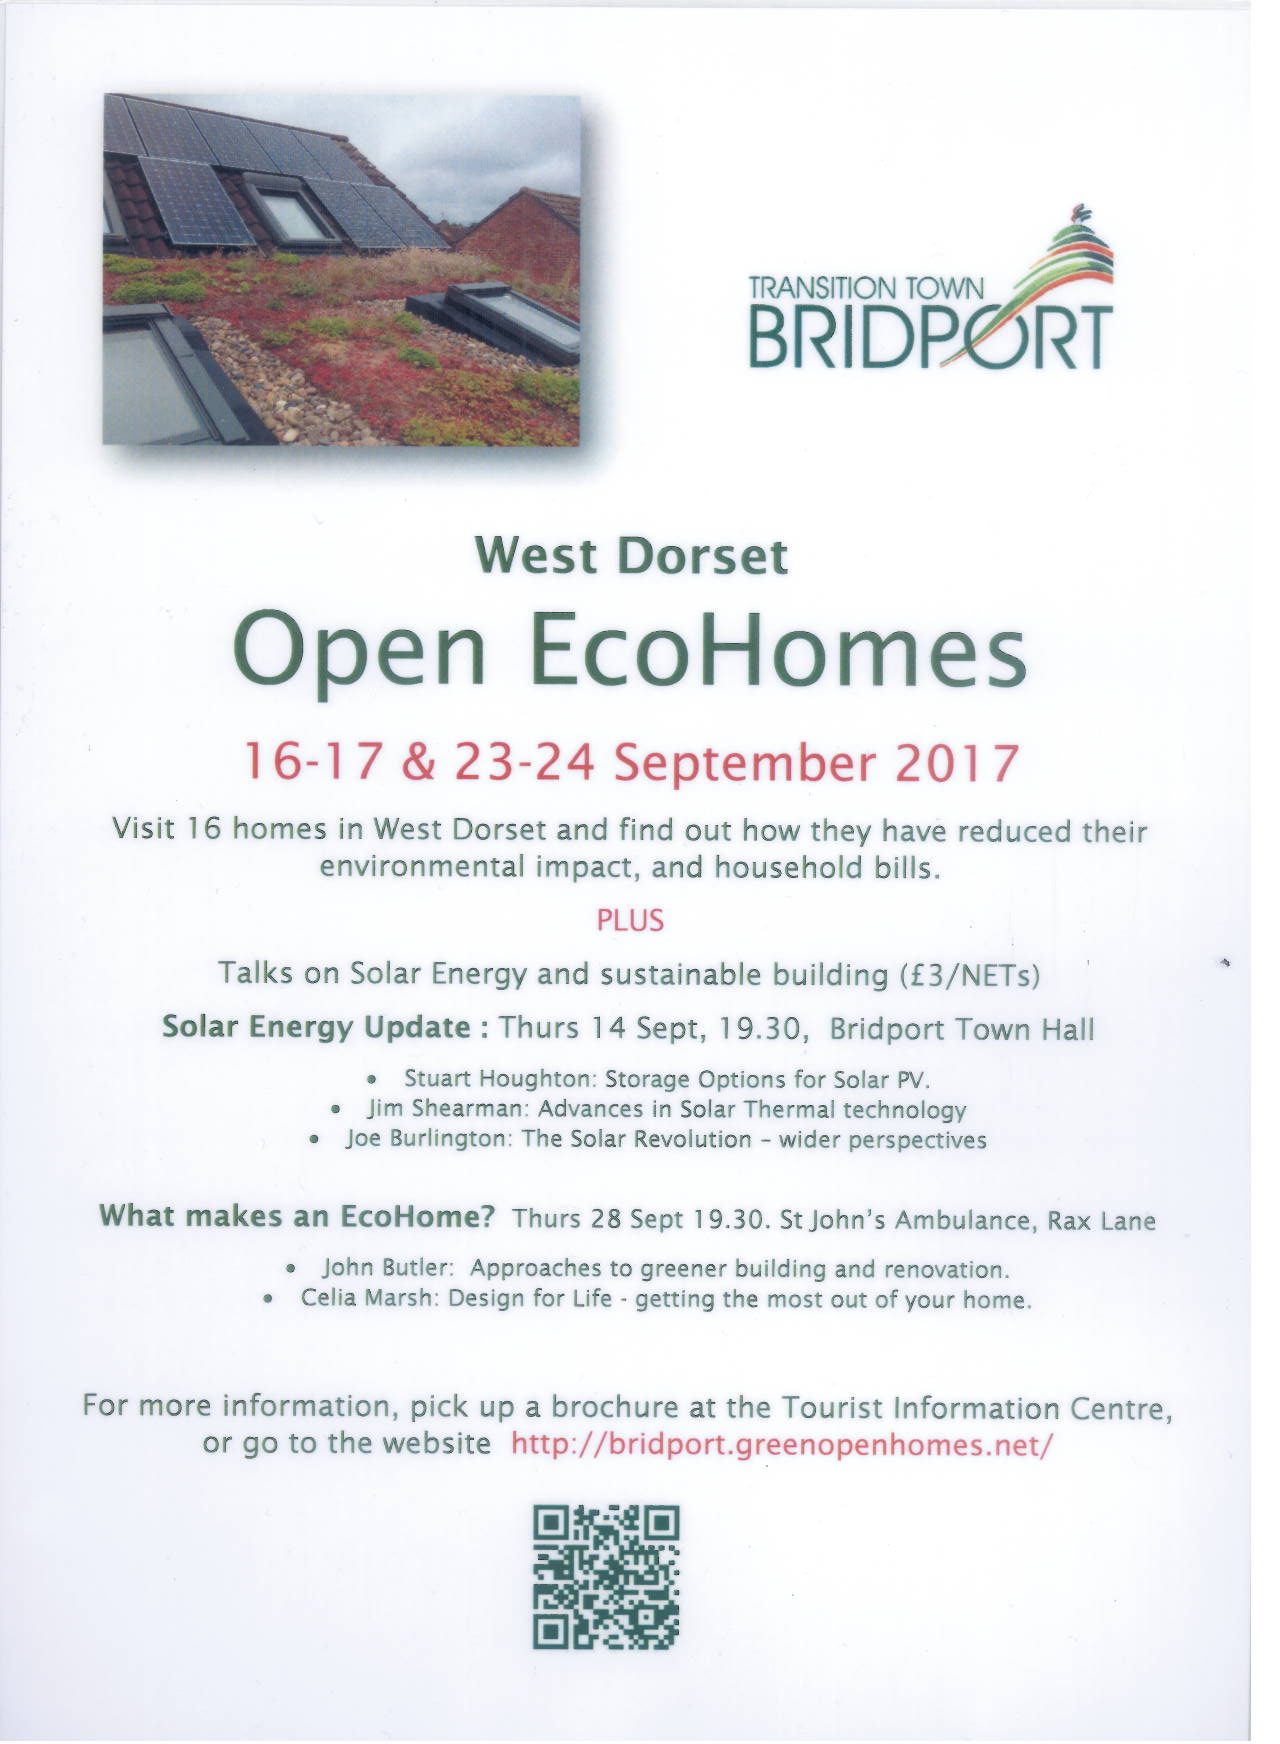 West Dorset Open EcoHomes